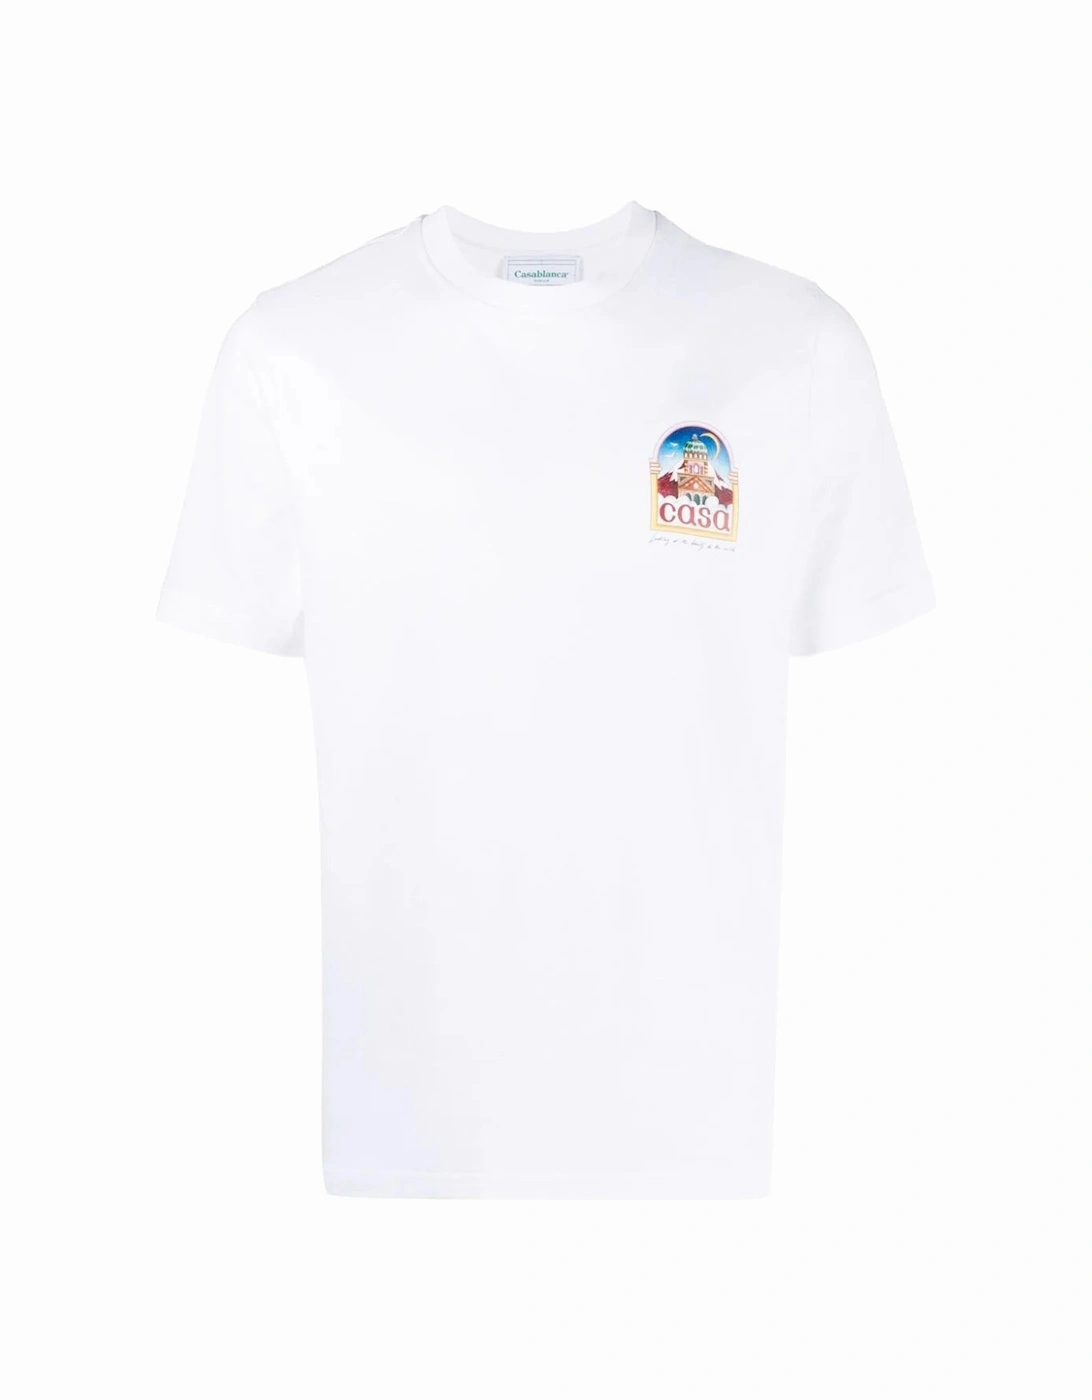 Vue De L'Arche Printed T-Shirt in White, 6 of 5